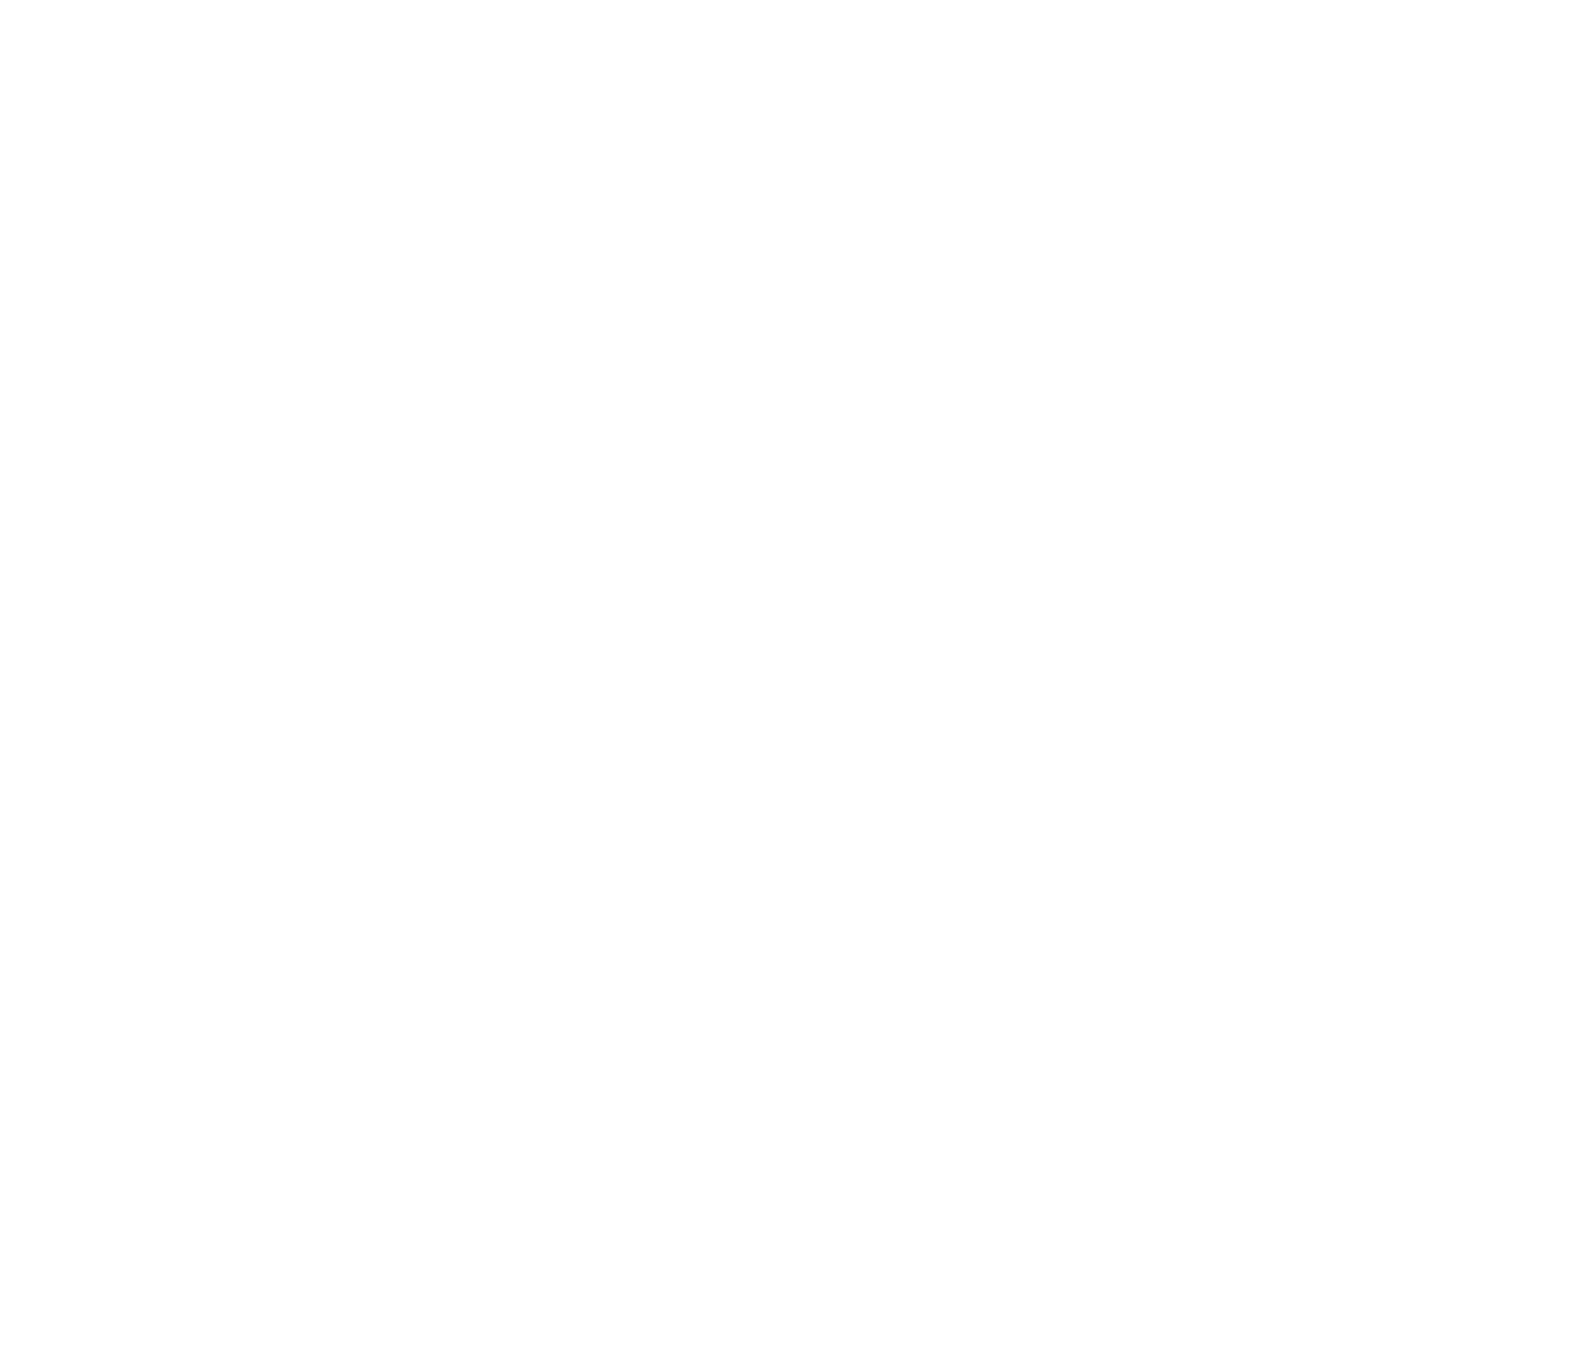 Wintrust Financial logo for dark backgrounds (transparent PNG)